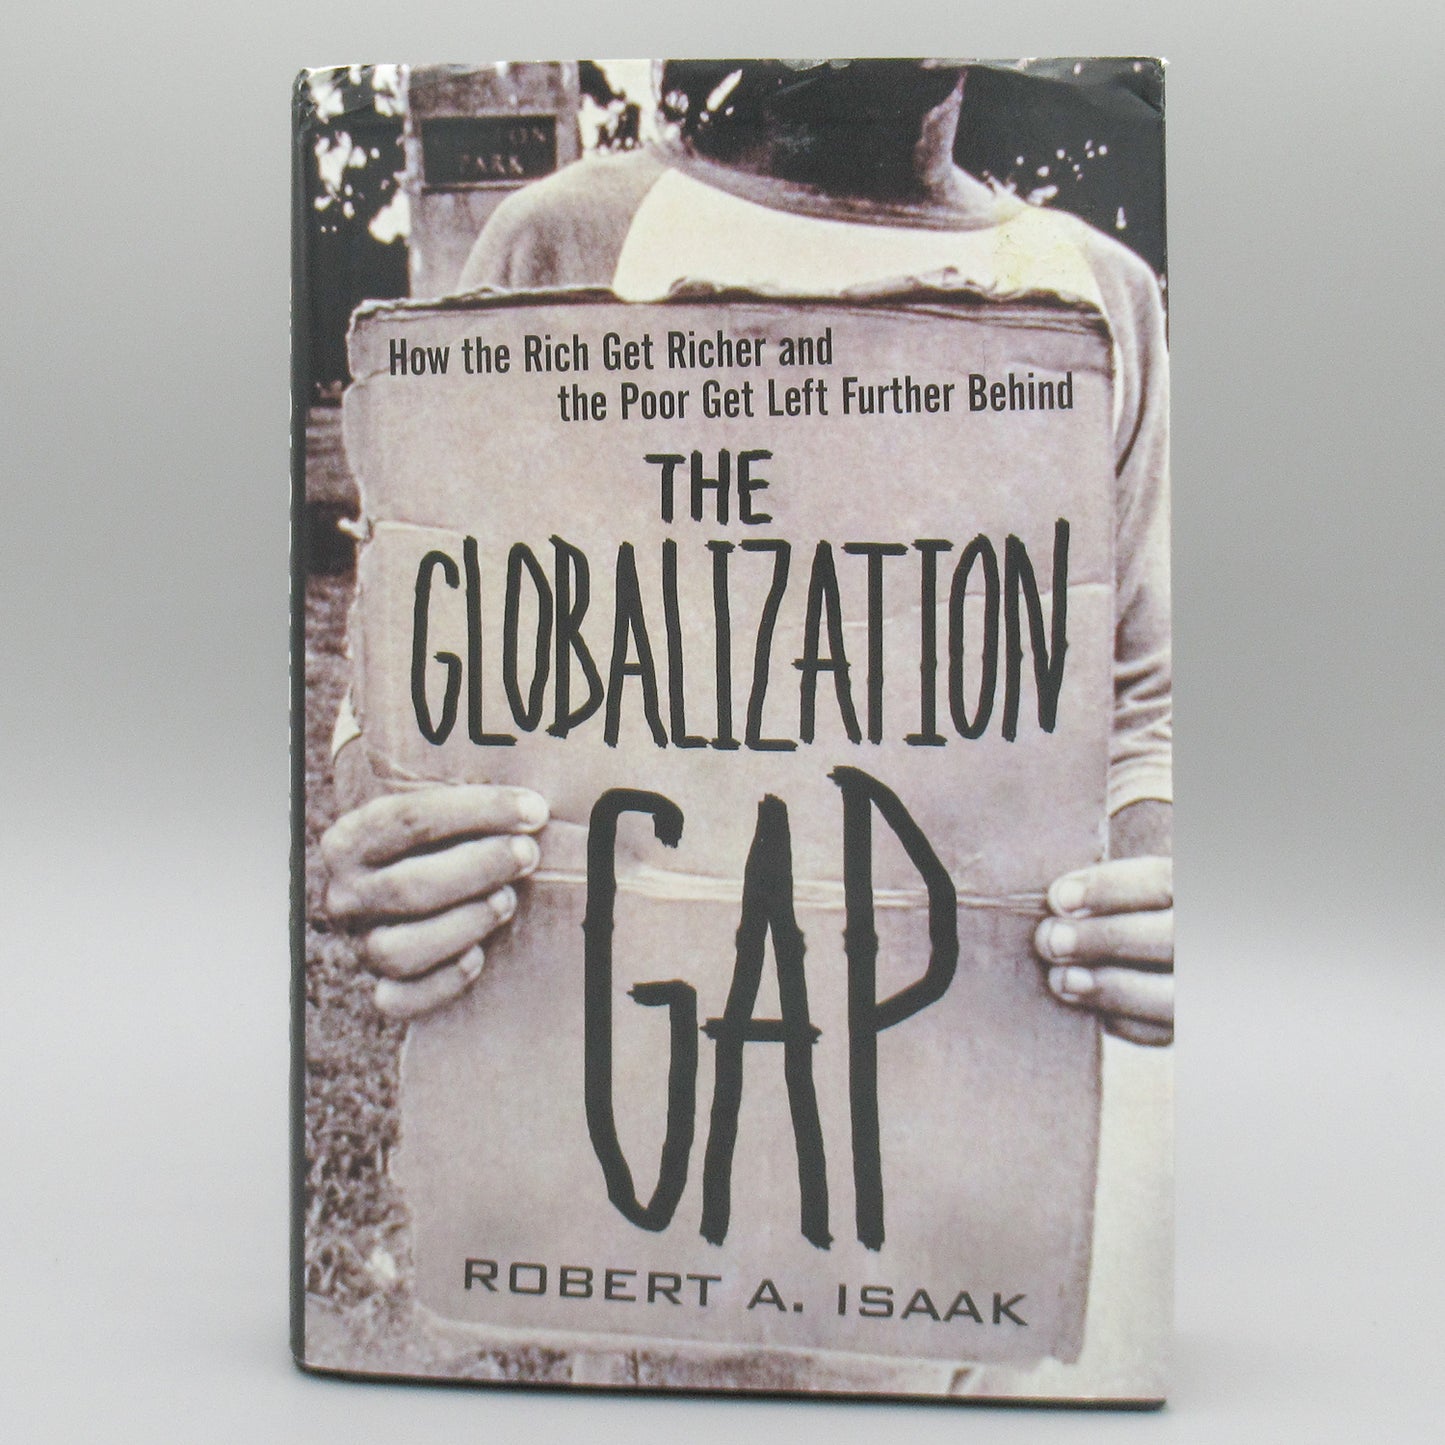 The Glogalization Gap